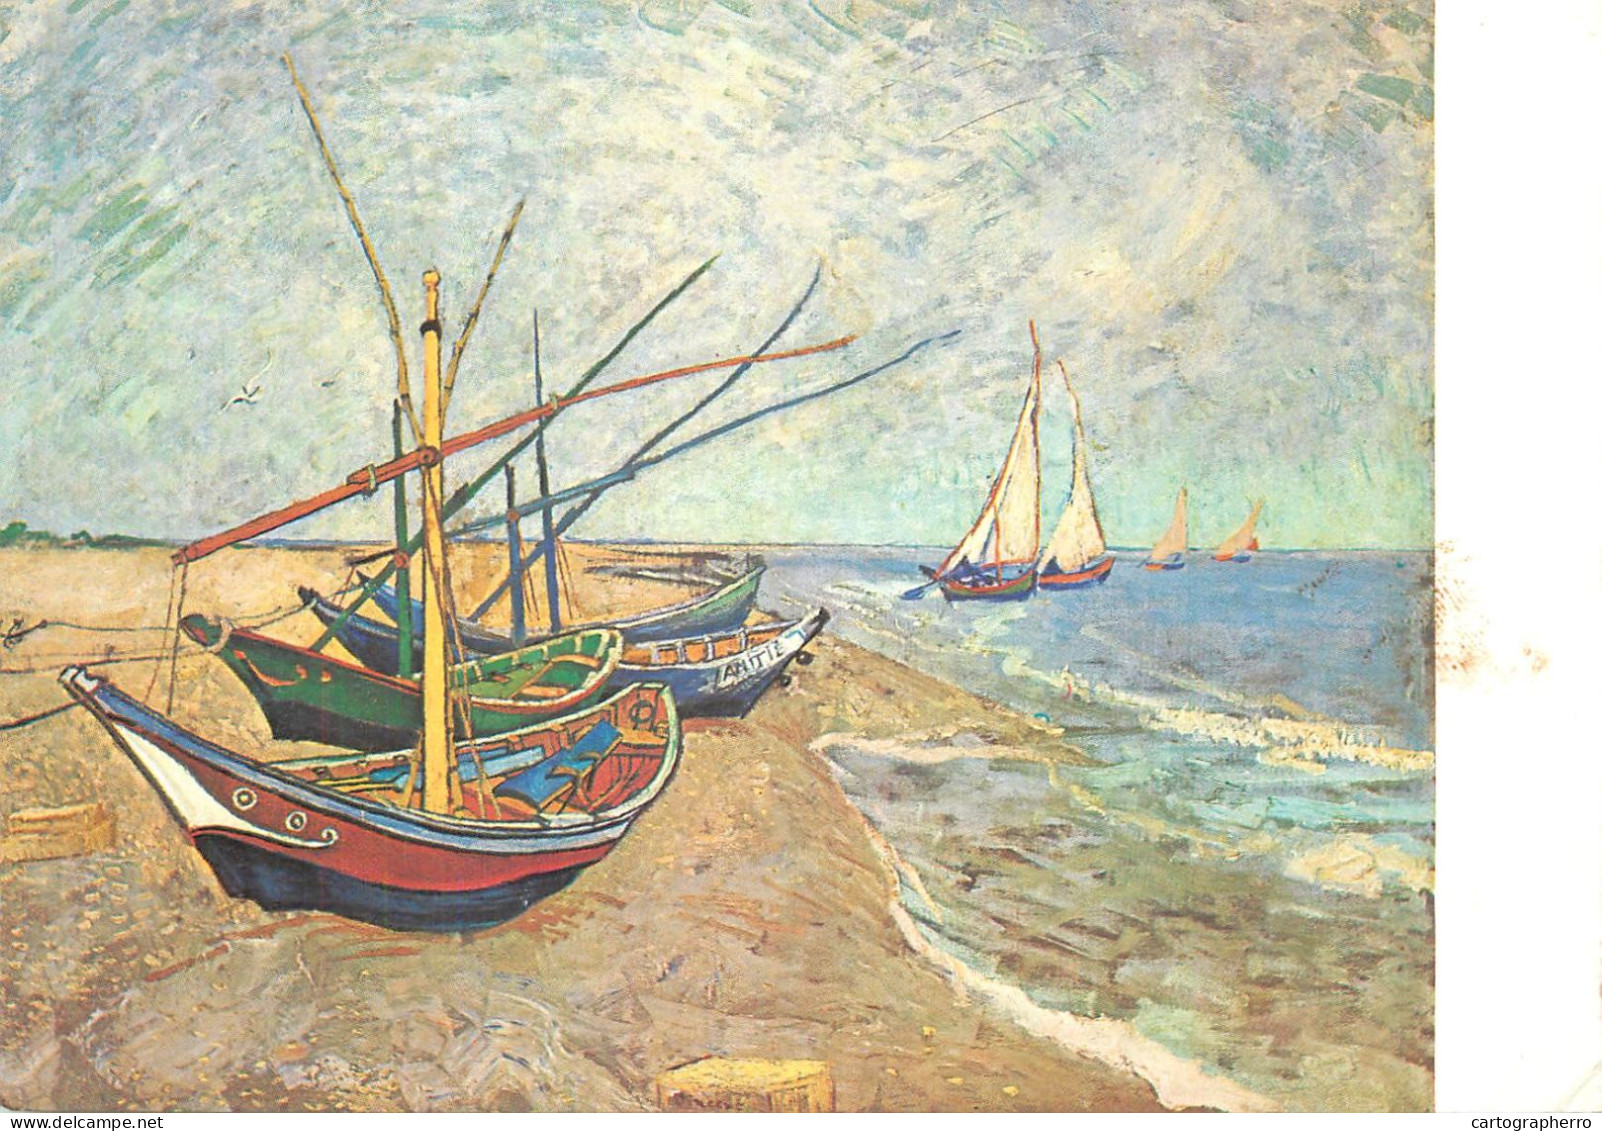 Navigation Sailing Vessels & Boats Themed Postcard Vincent Van Gogh Boats On The Beach - Sailing Vessels